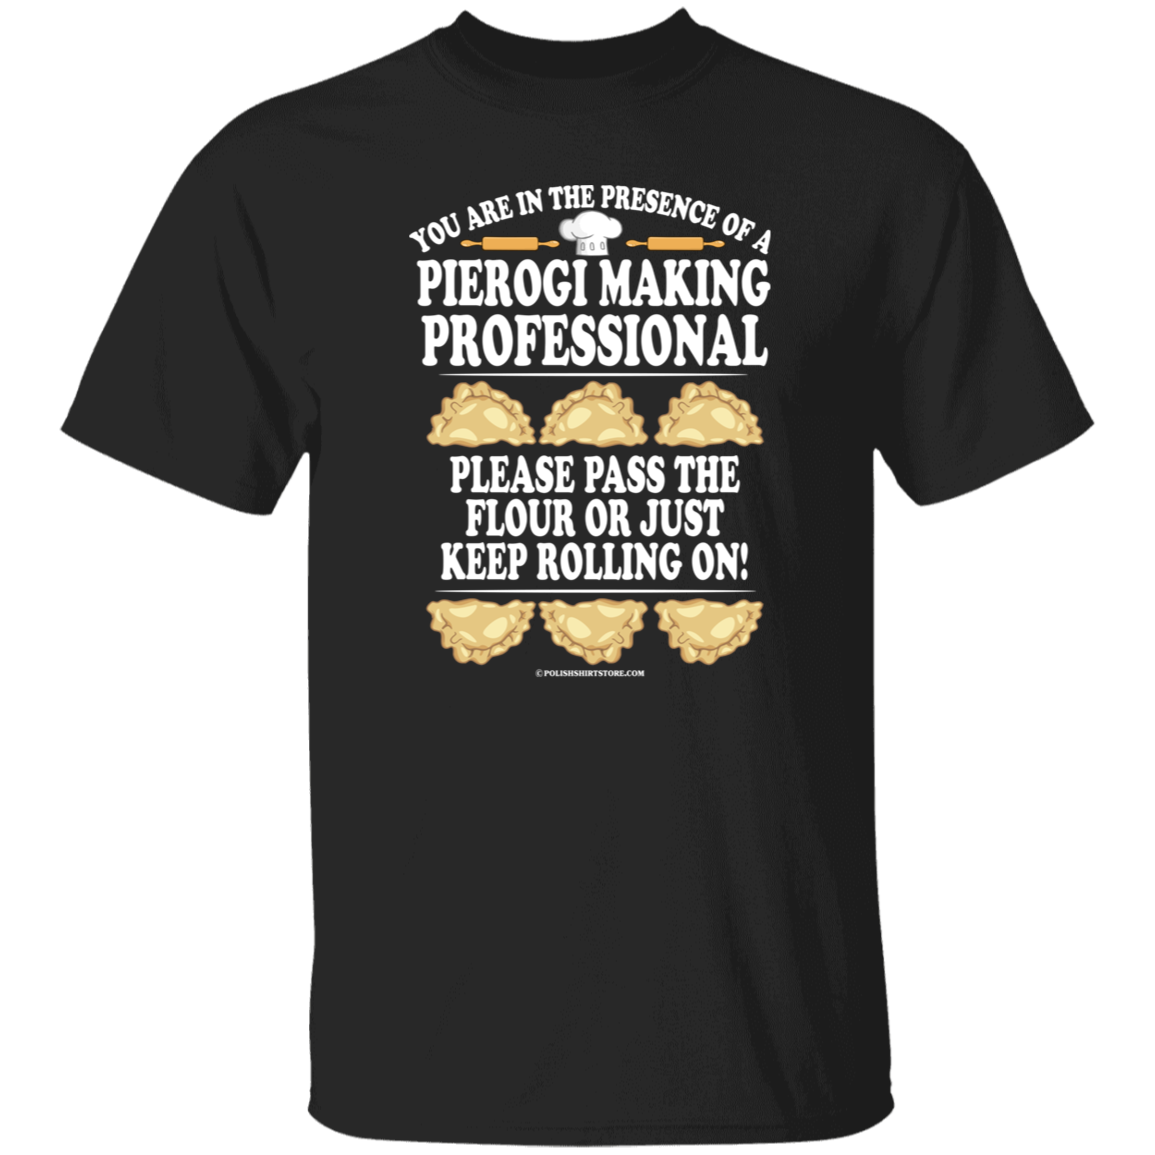 Pierogi Making Professional T-Shirt Apparel CustomCat G500 5.3 oz. T-Shirt Black S